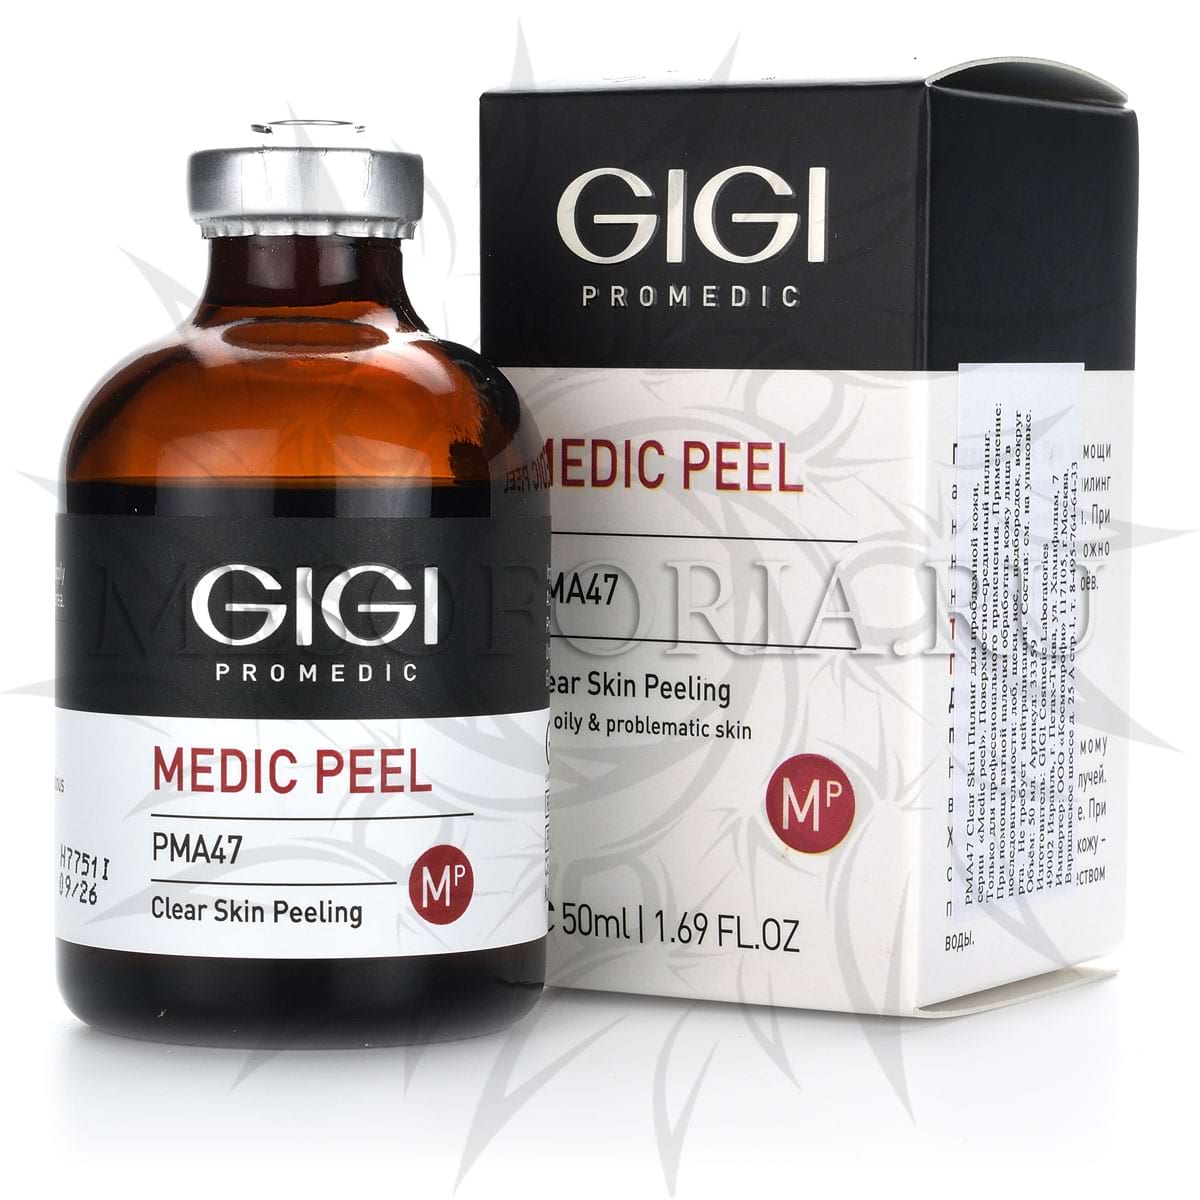 Пилинг для проблемной кожи / Clear Skin, Medic Peel PMA47, GiGi (Джи Джи) – 50 мл